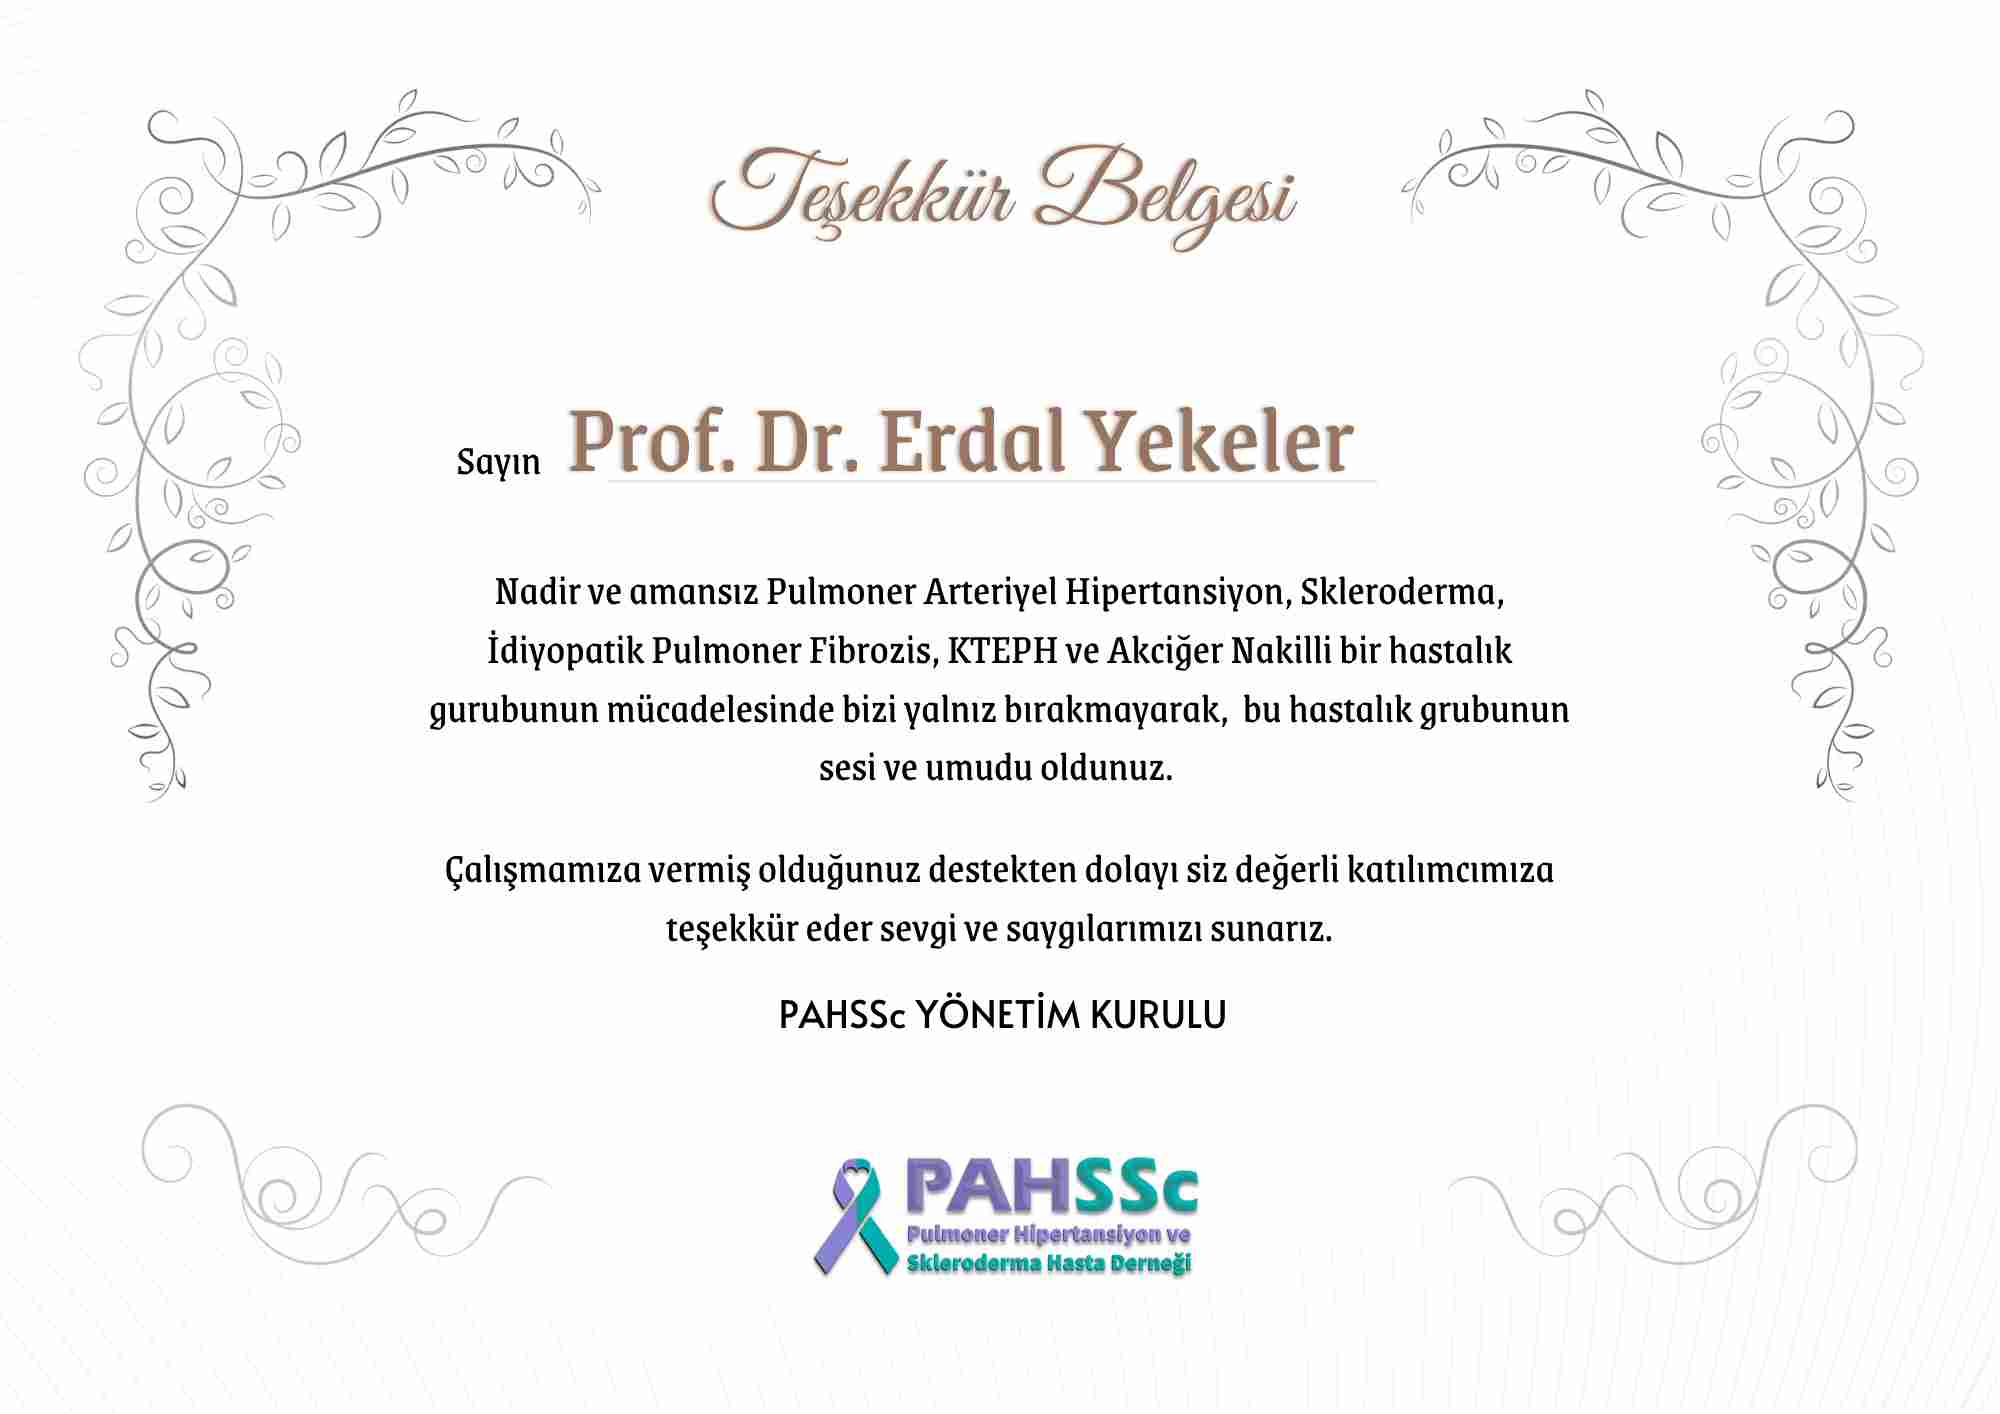 Prof. Dr. Erdal Yekeler